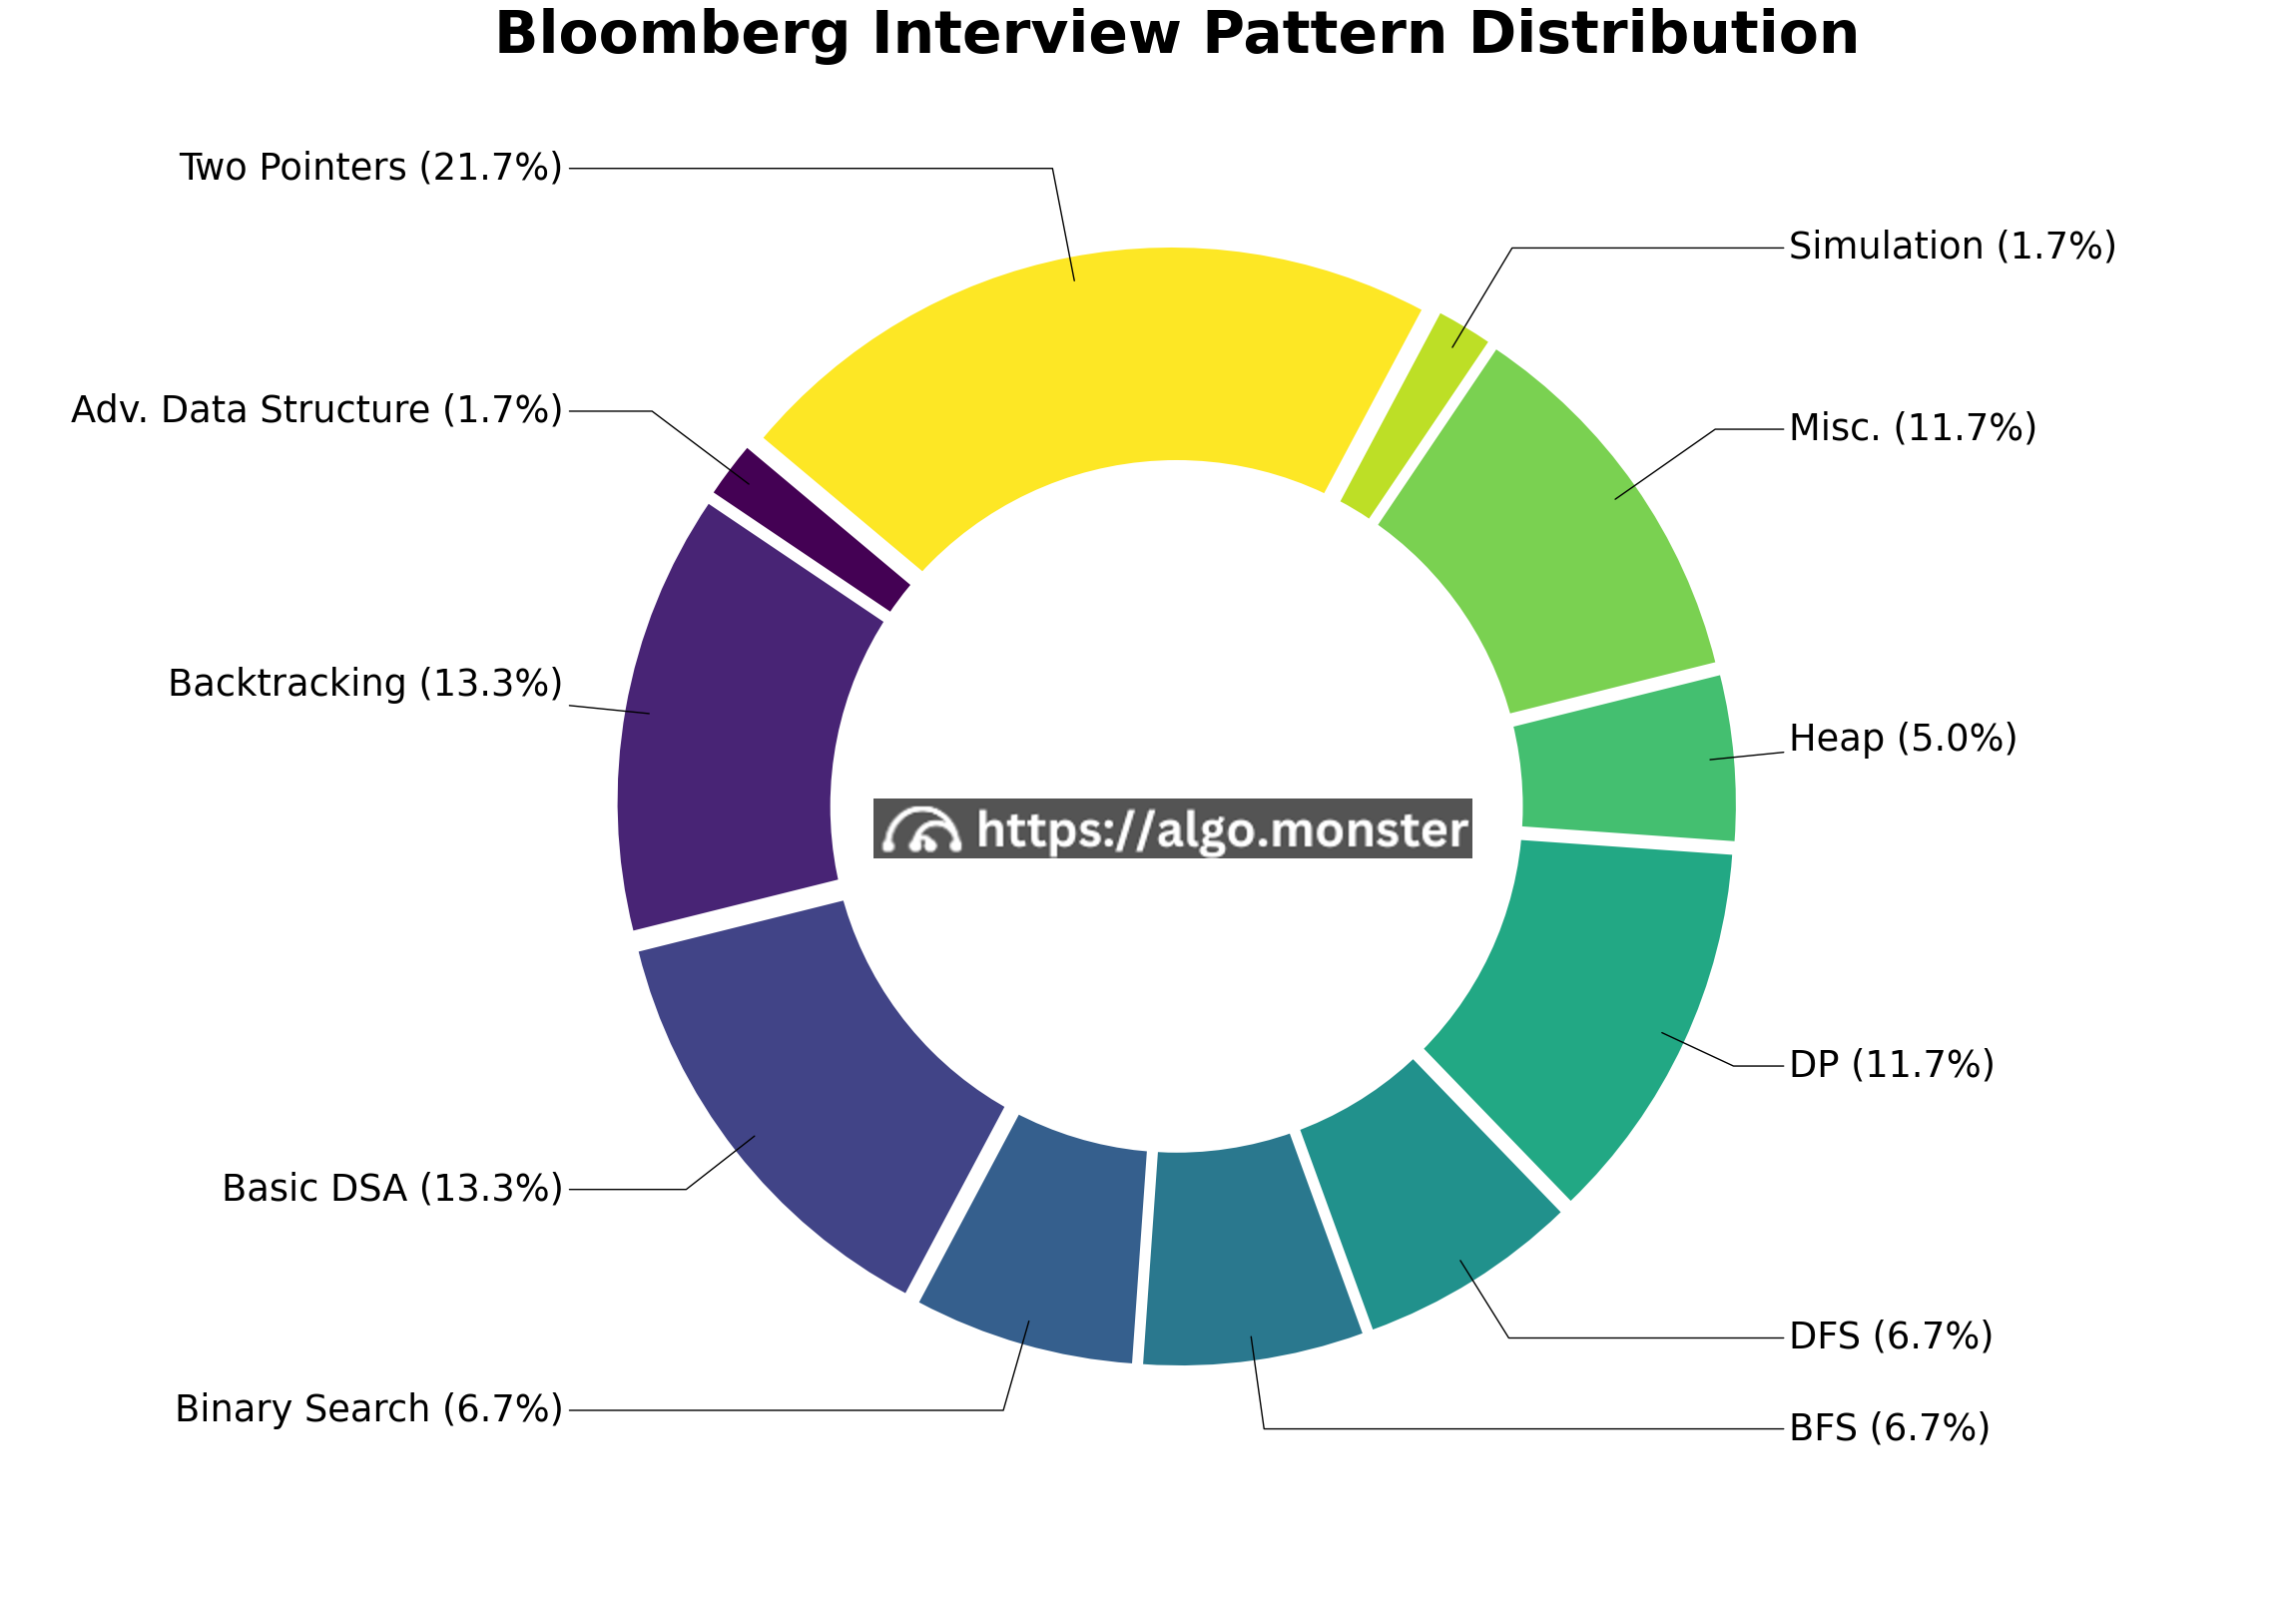 Bloomberg interview questions breakdown